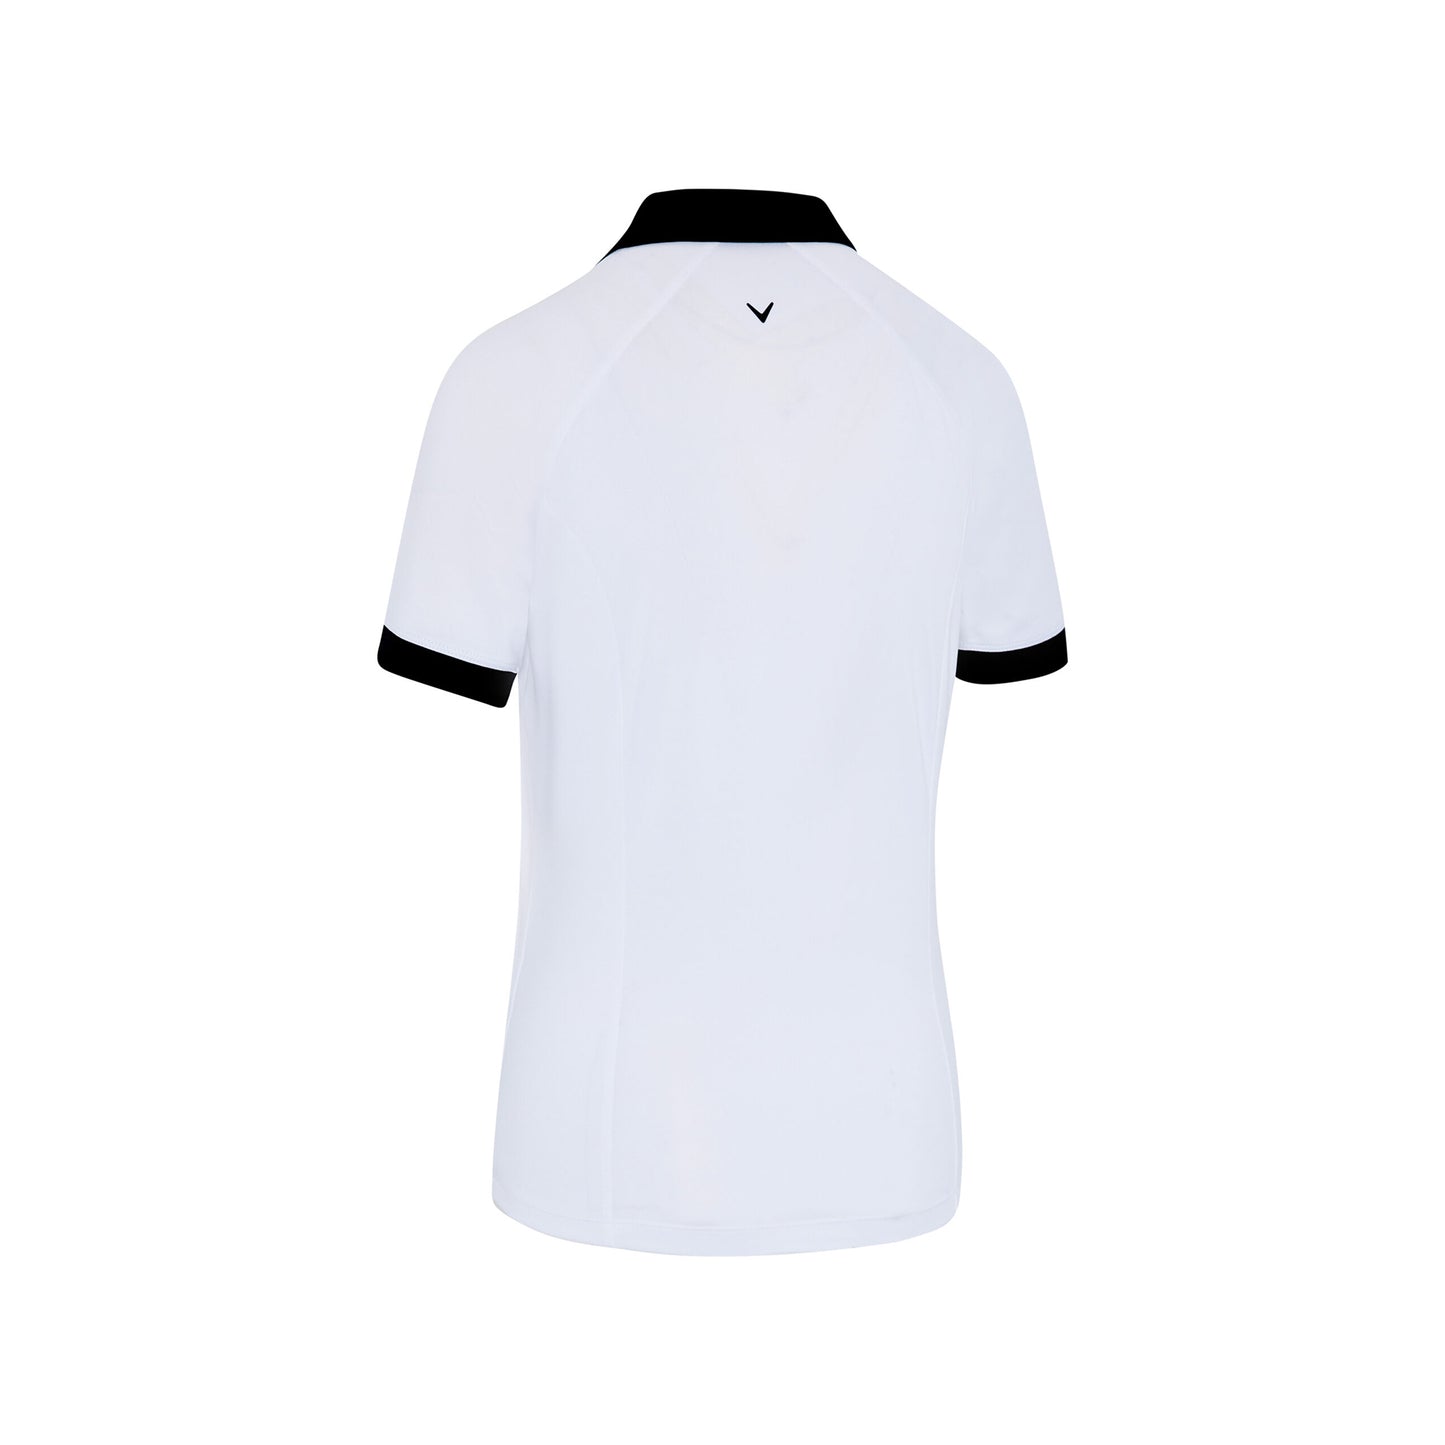 Callaway Ladies Short Sleeve Colour Block Golf Polo in White & Black